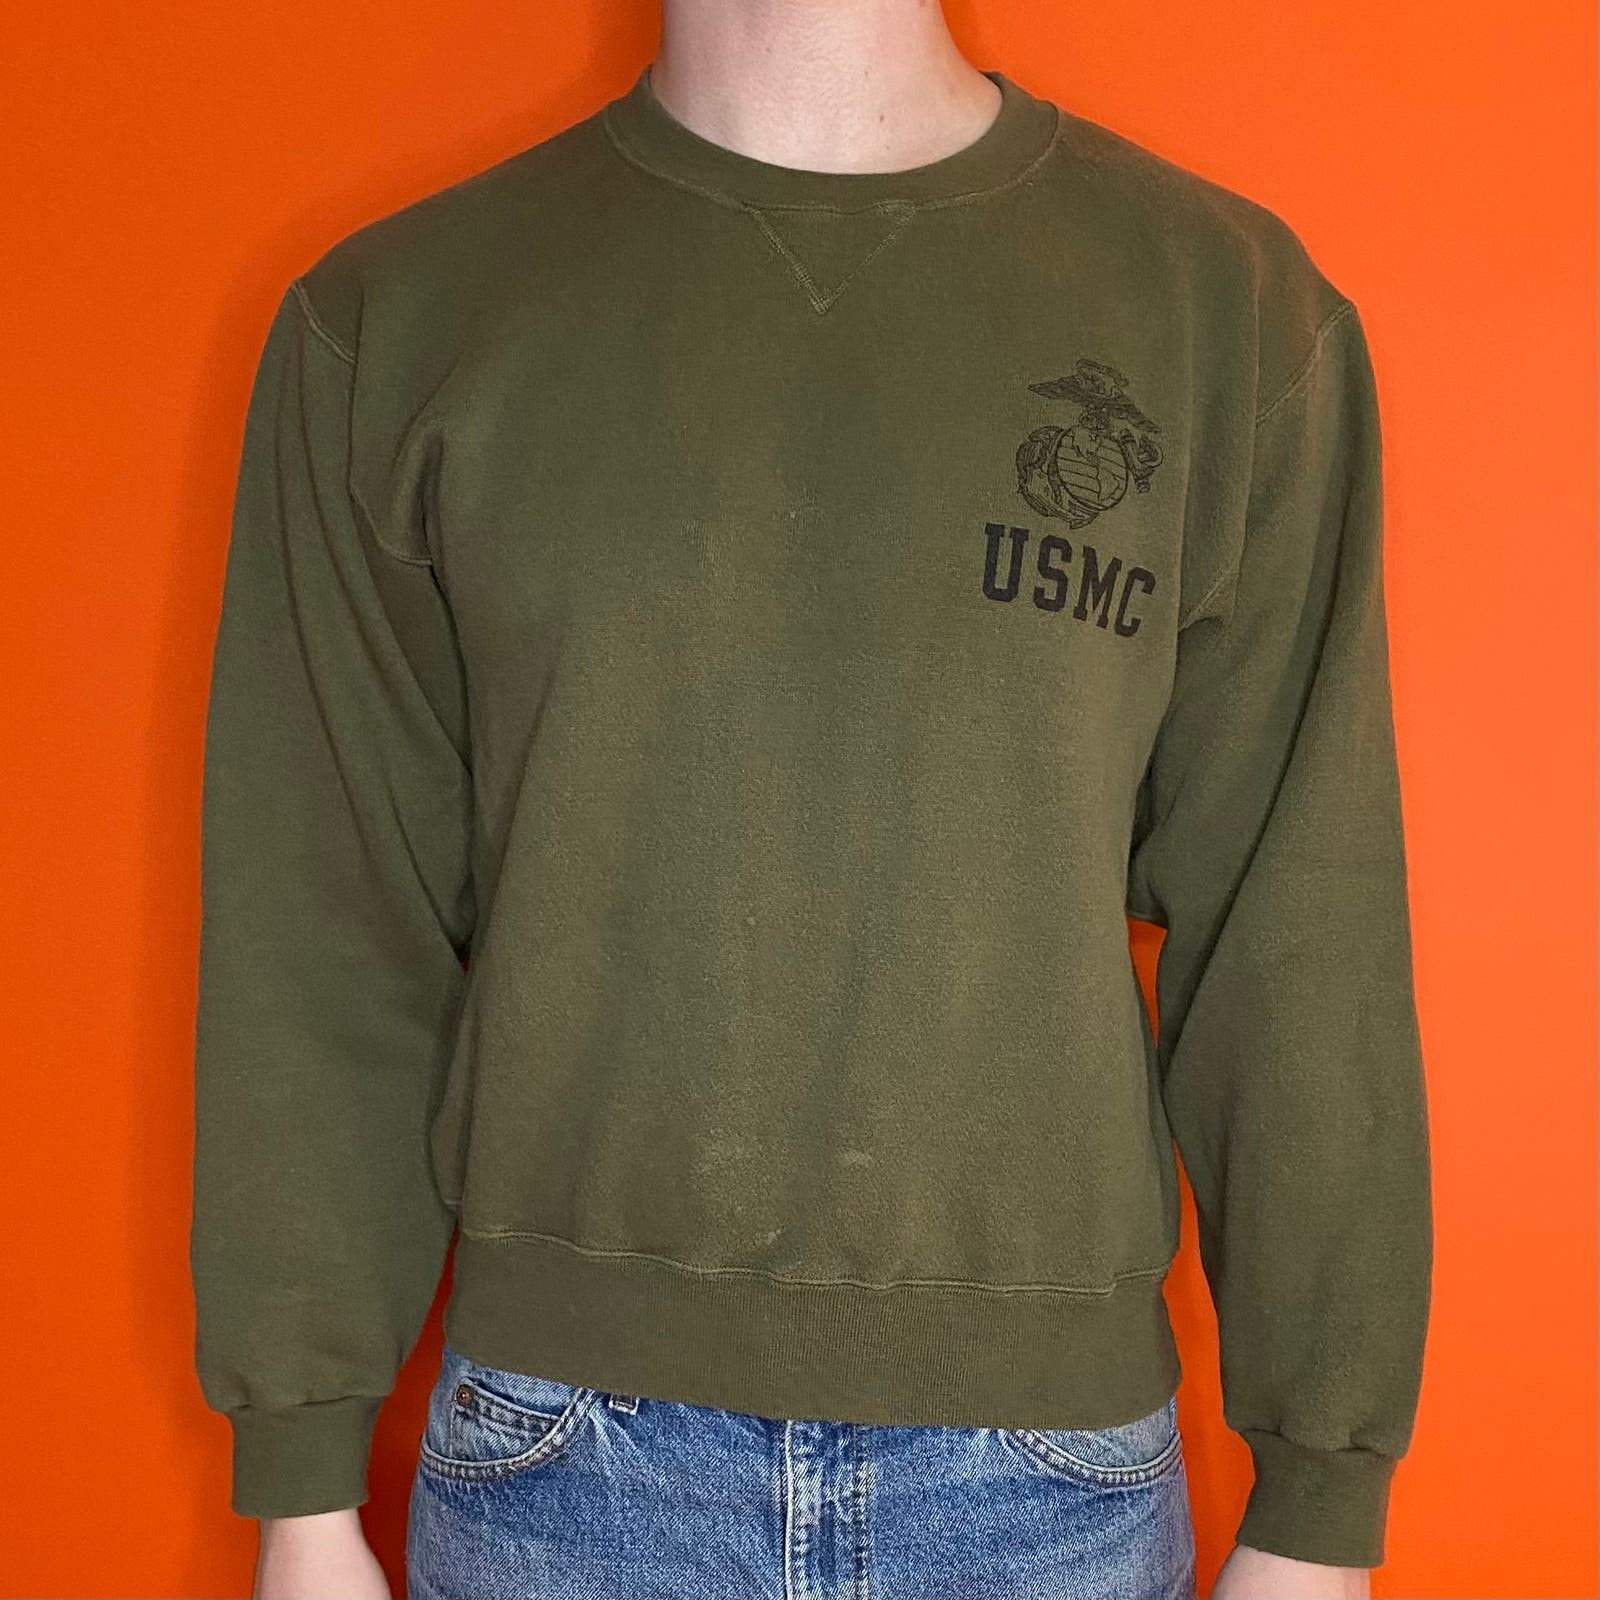 Vintage Crazy Vintage Y2K Sweatshirt US Marines Military Green Size US S / EU 44-46 / 1 - 1 Preview